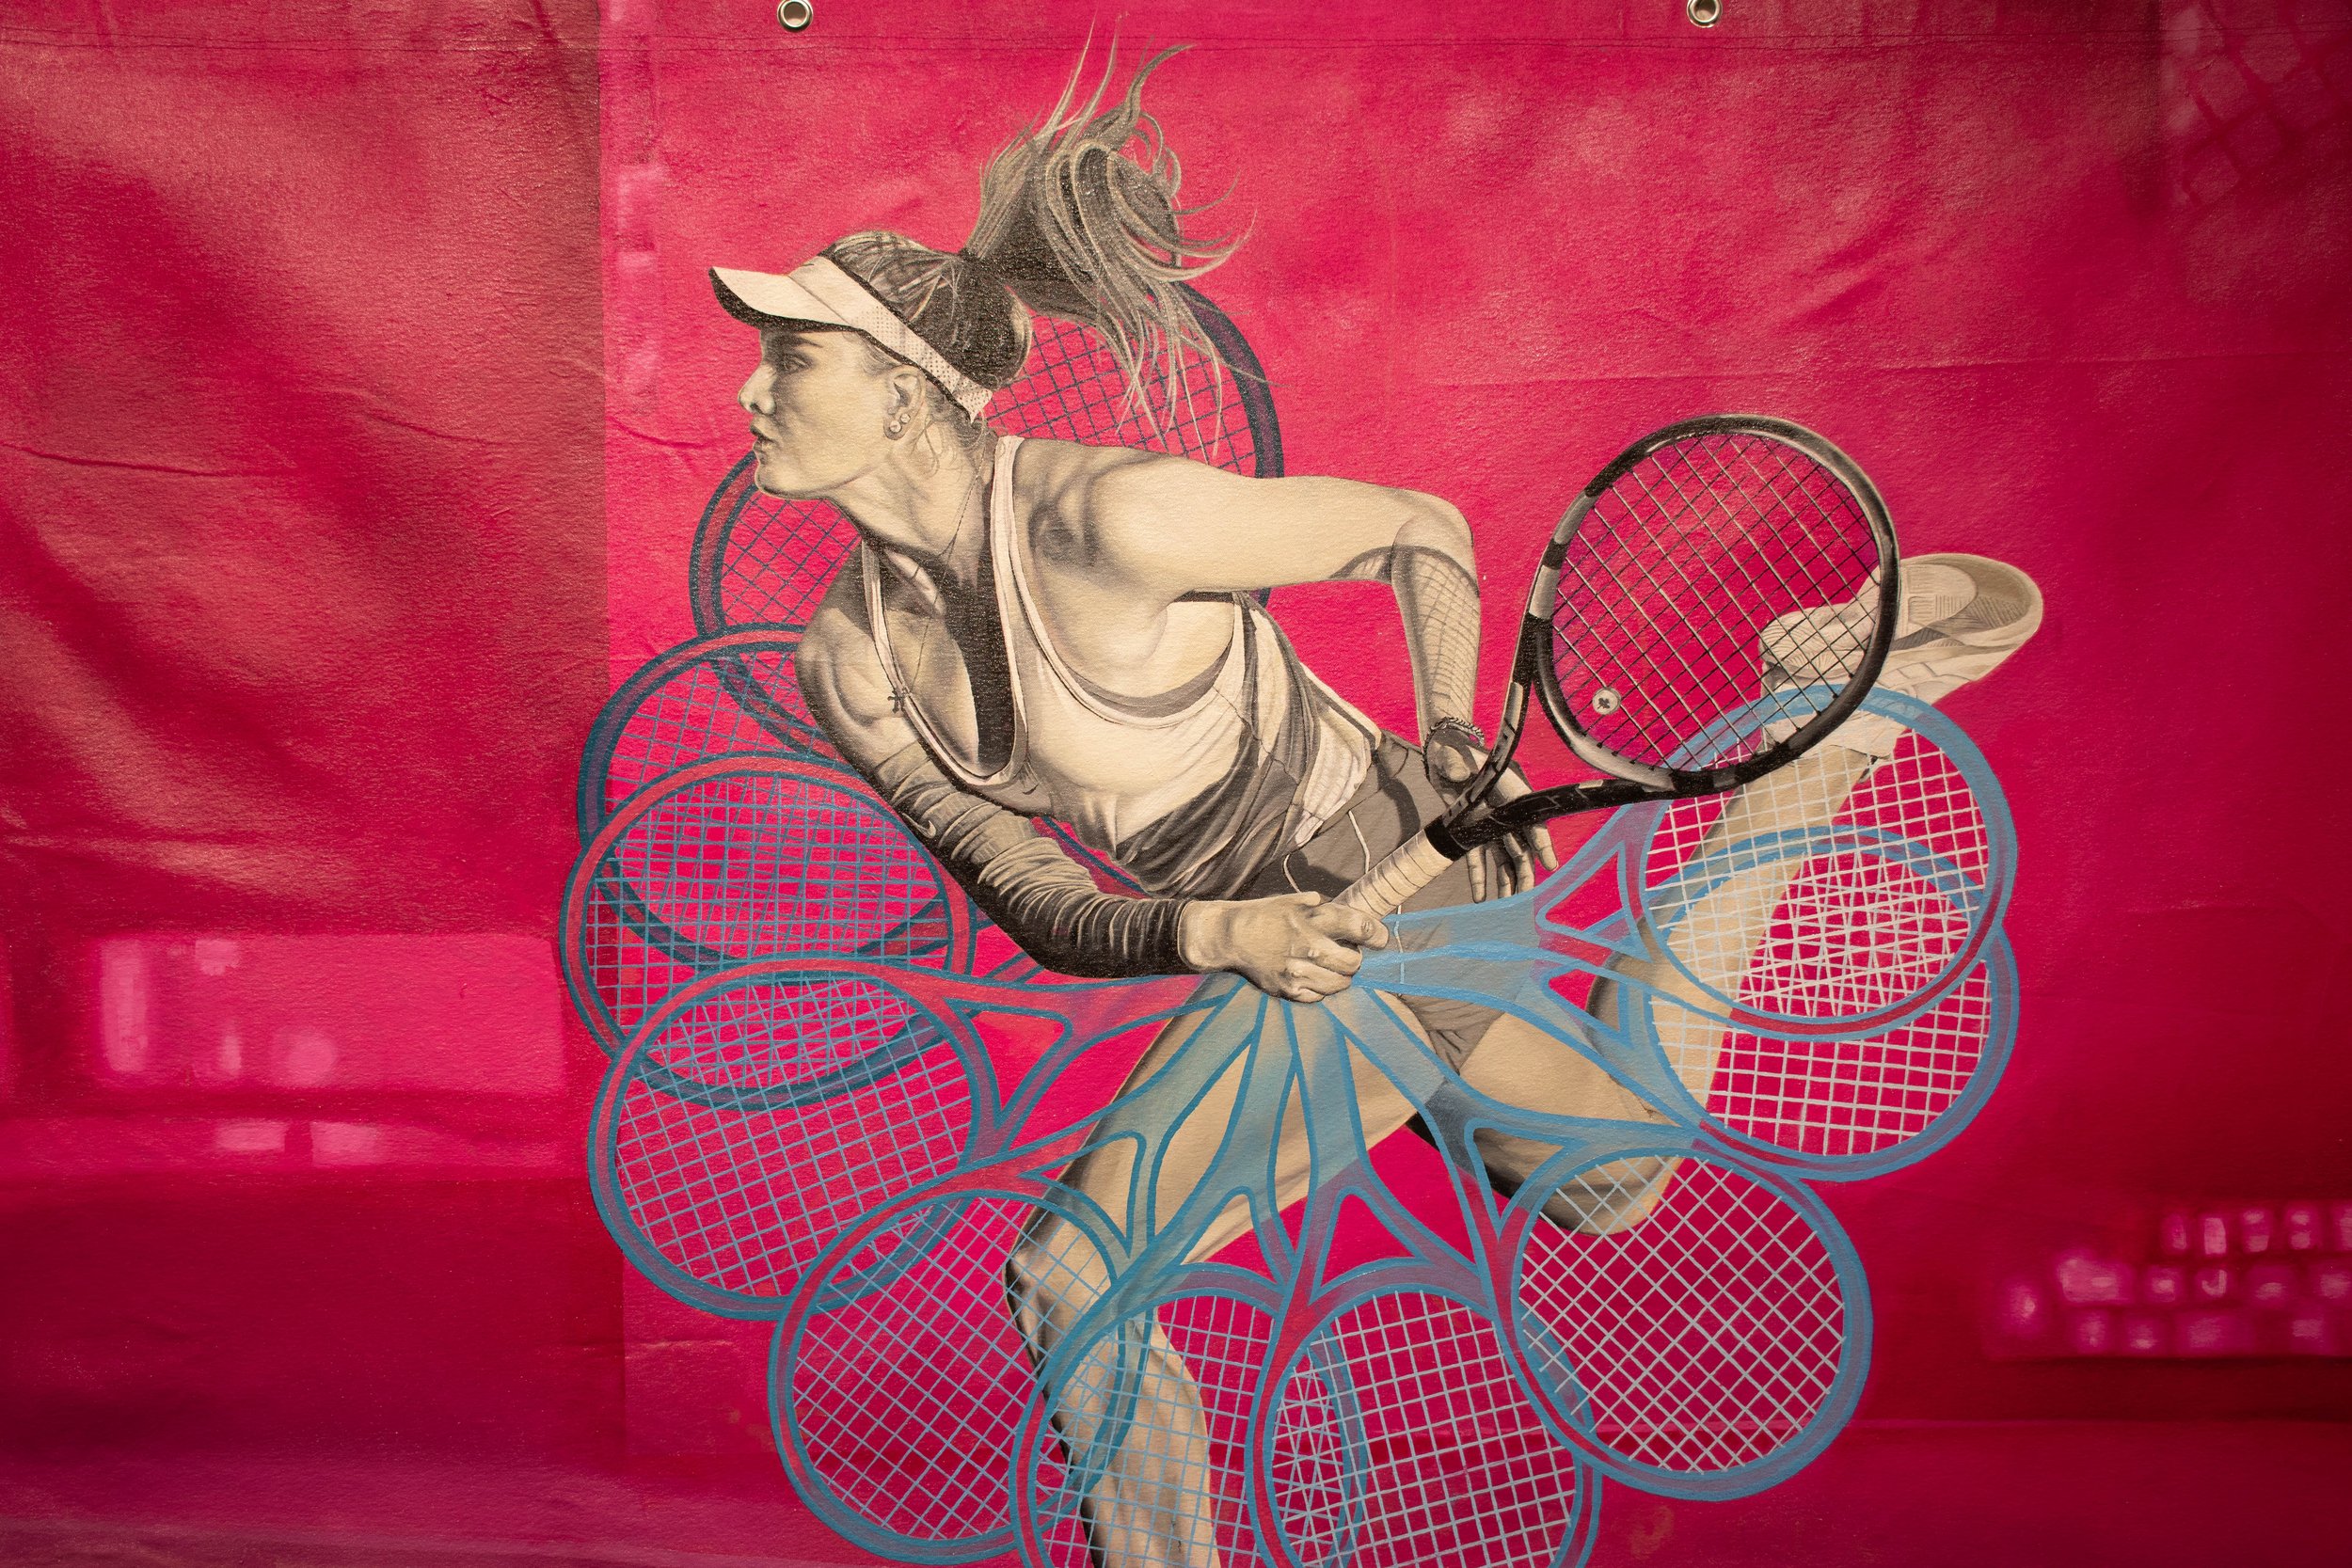 Ft. Layne Sleeth, Oklahoma State Women's Tennis